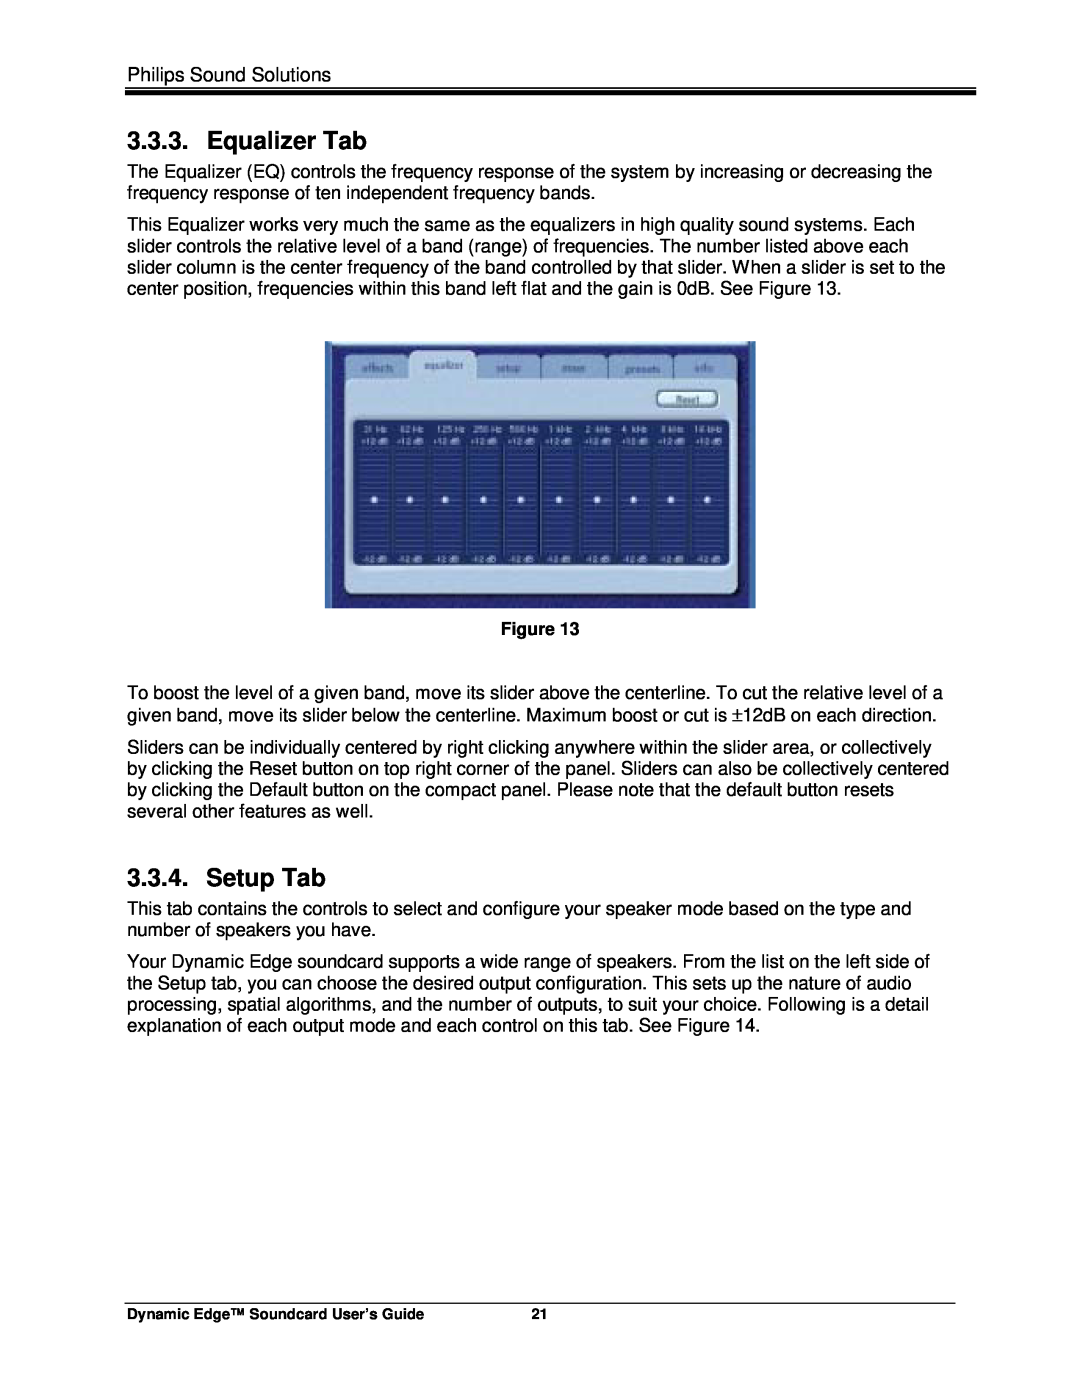 Philips PSC604 manual Equalizer Tab, Setup Tab 